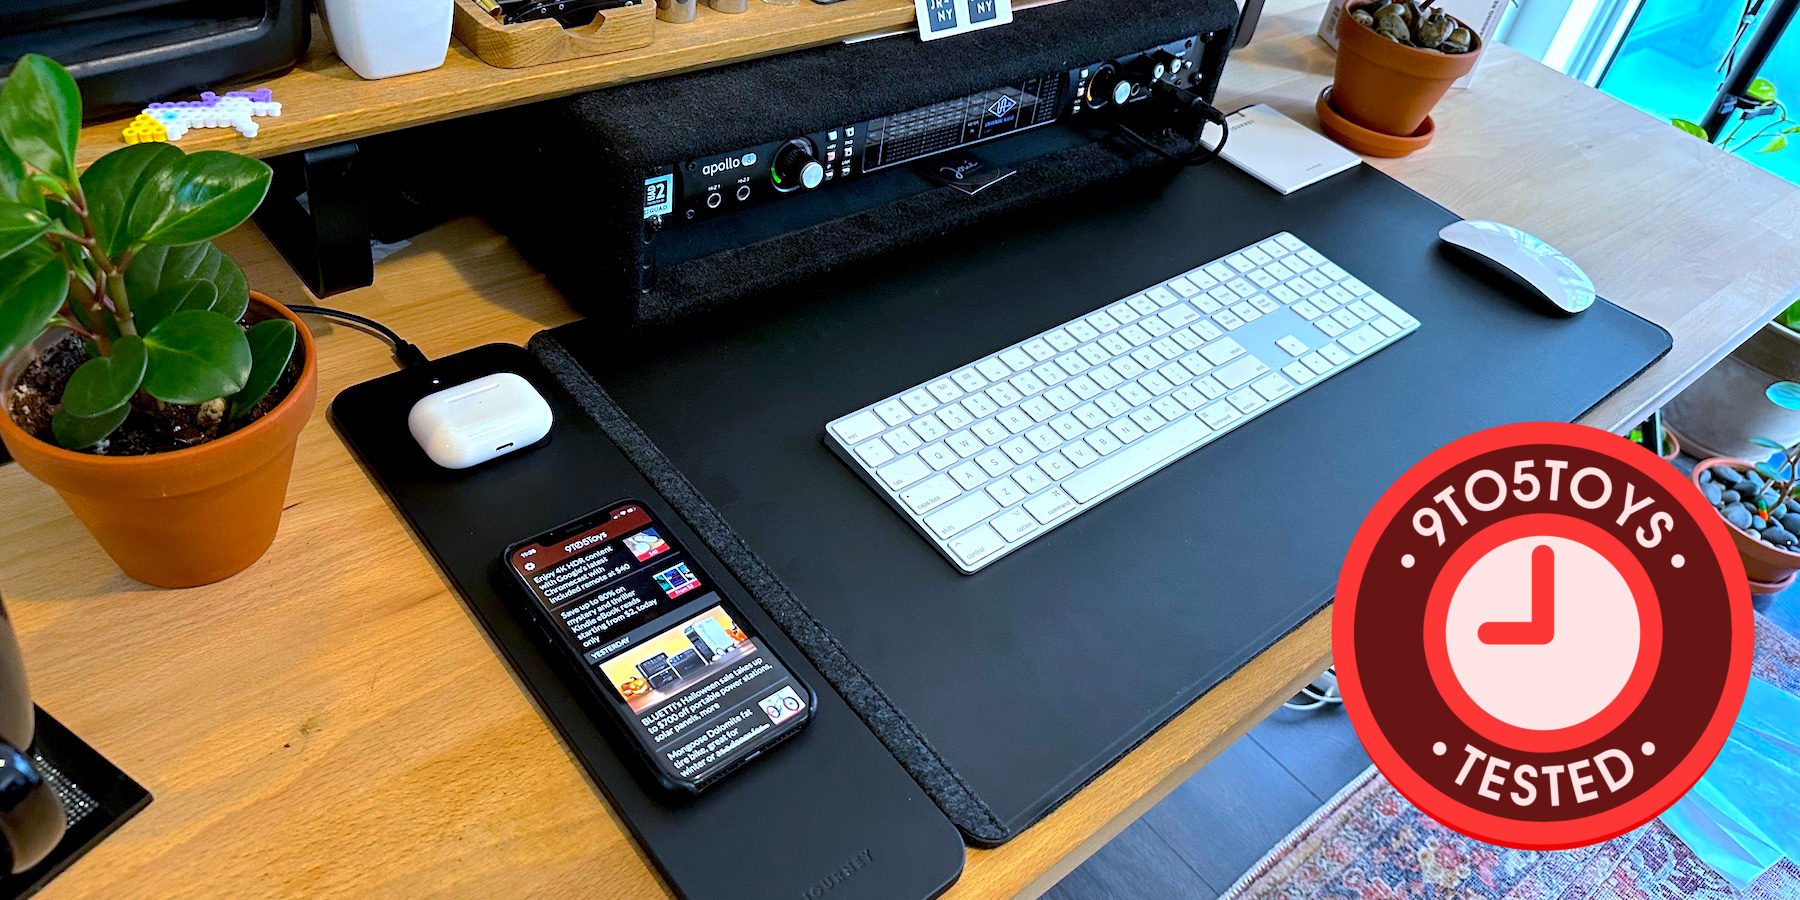 Journey Alti Slim Desk Mat Review: Built-In MagSafe Charging? 